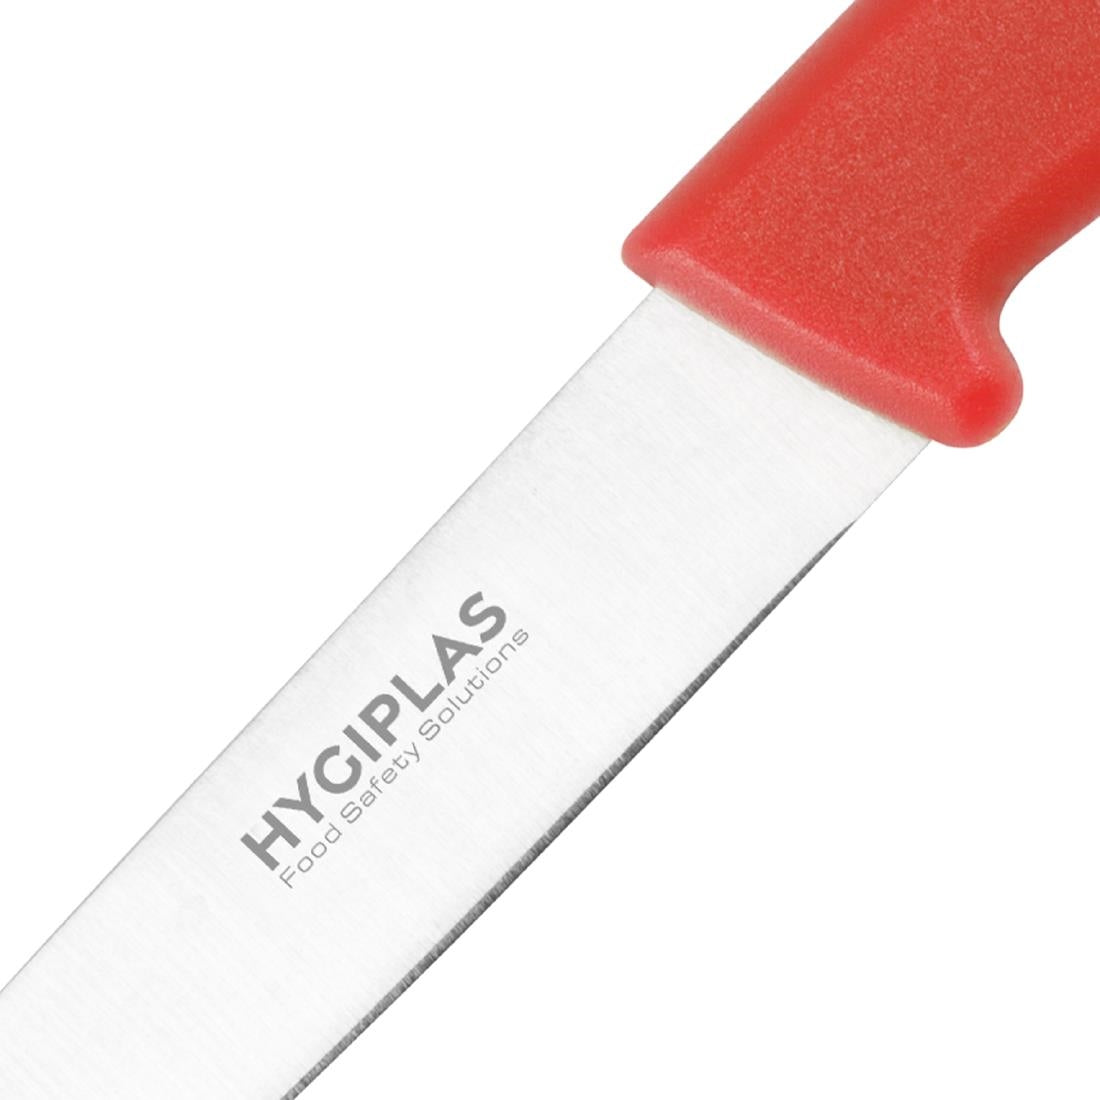 C542 Hygiplas Paring Knife Red 7.5cm JD Catering Equipment Solutions Ltd